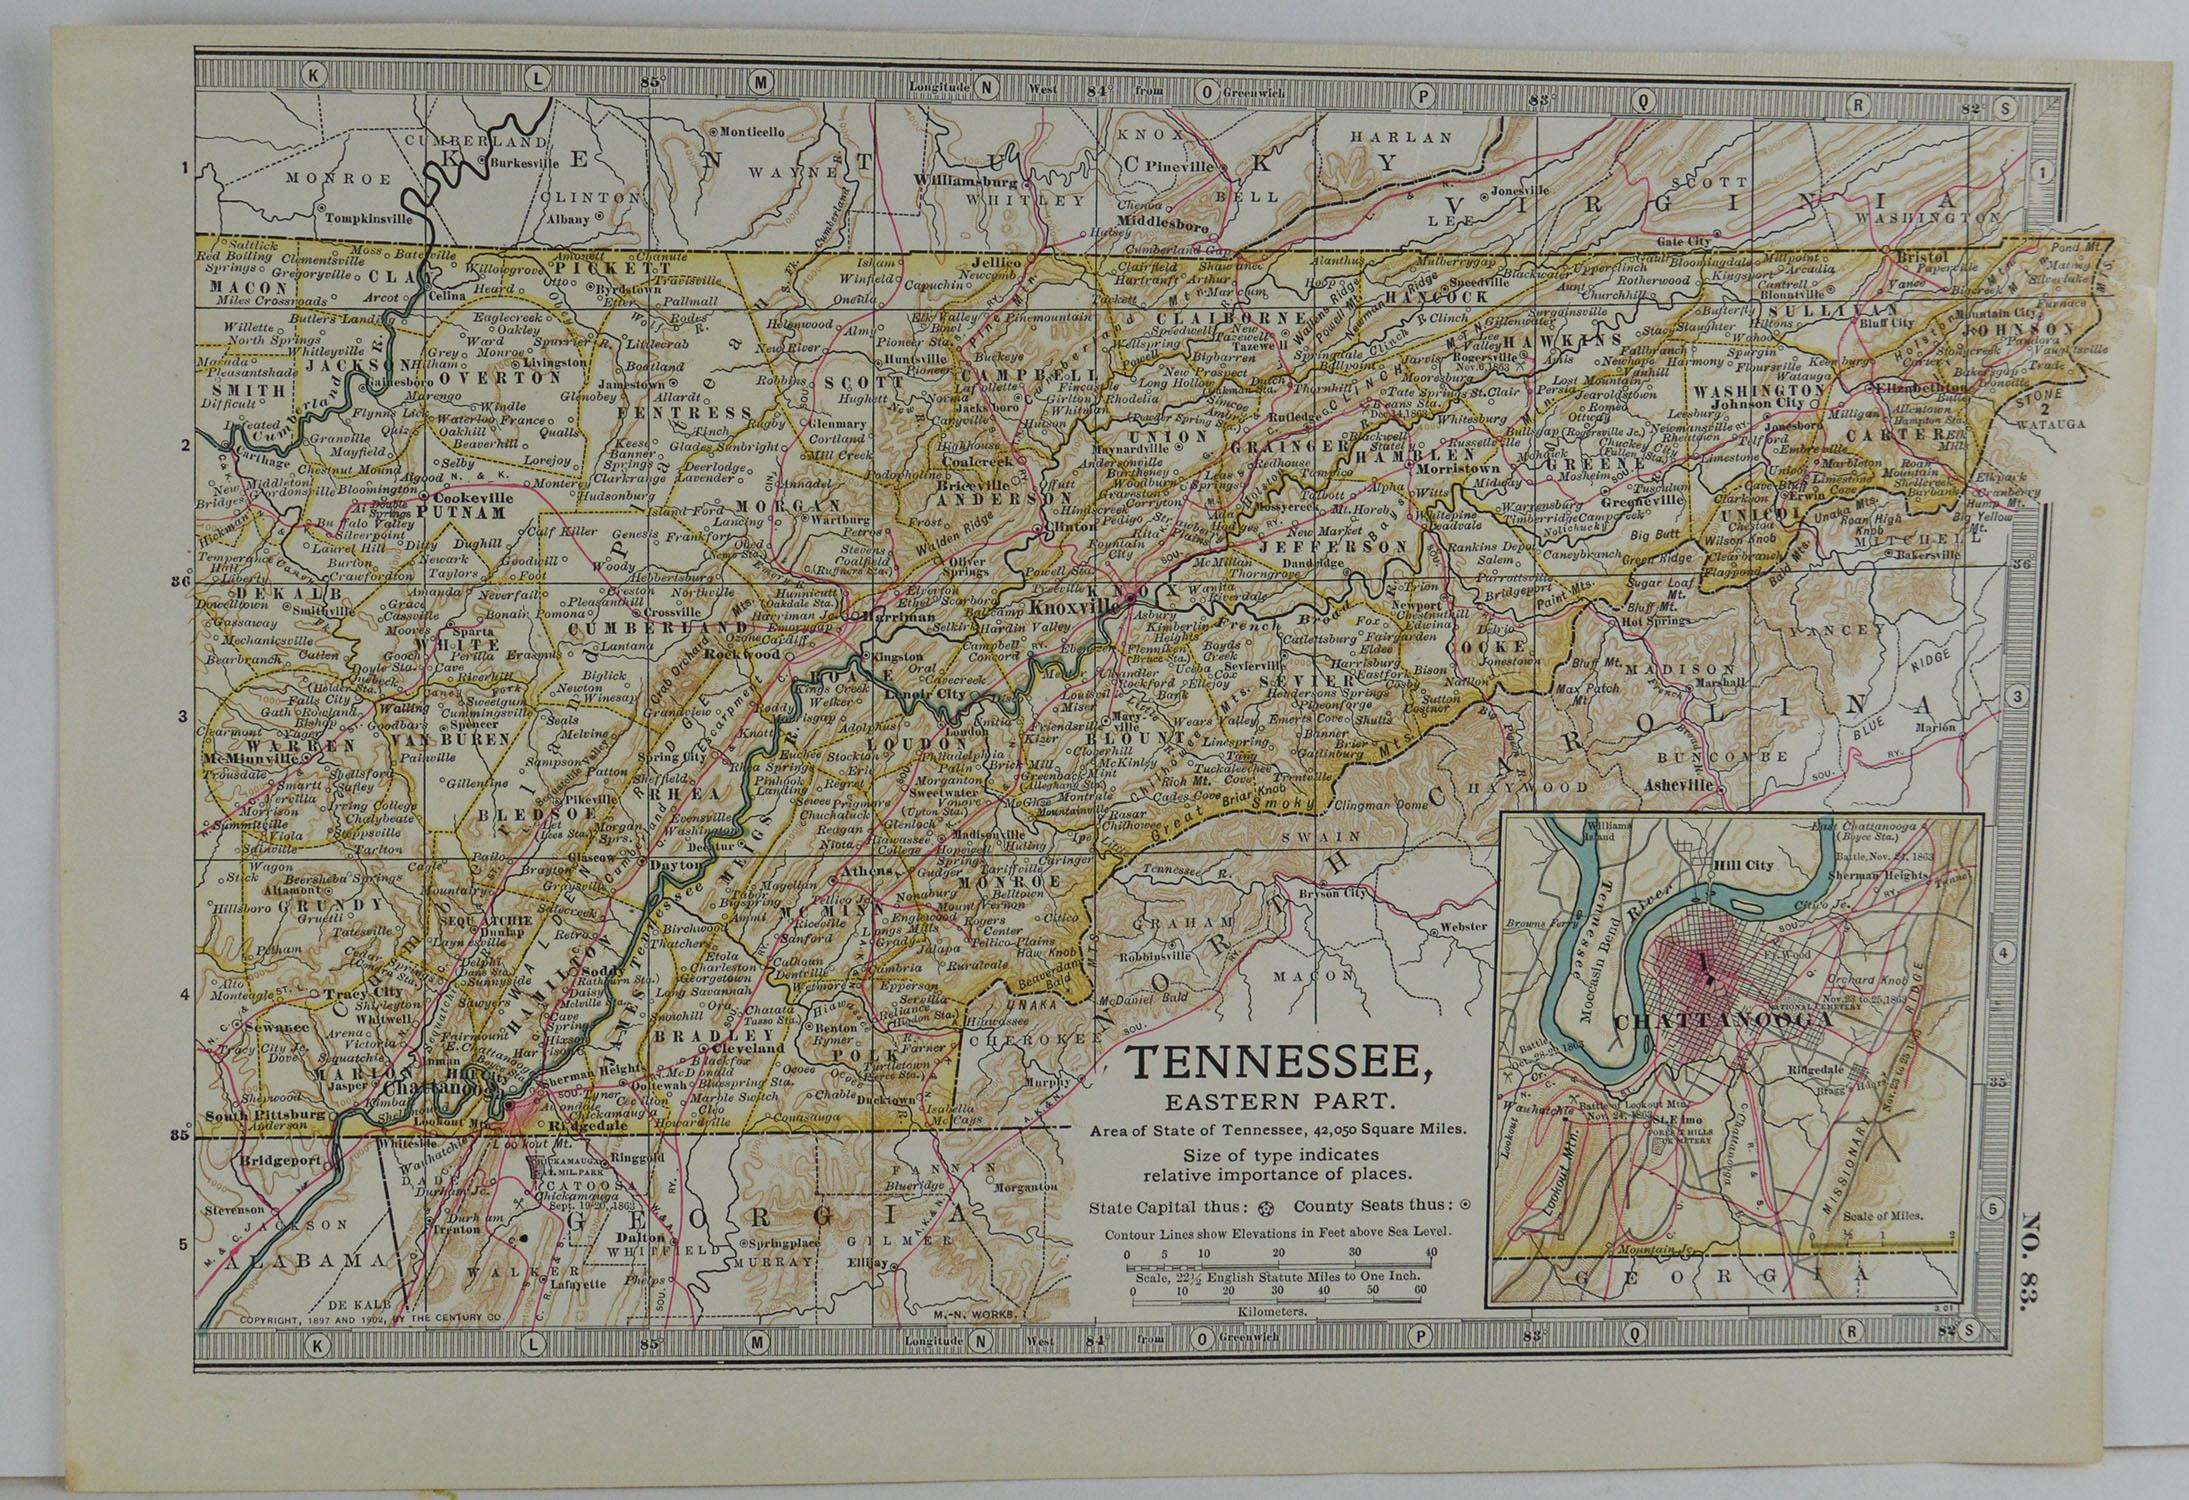 English Original Antique Map of Tennessee, circa 1890